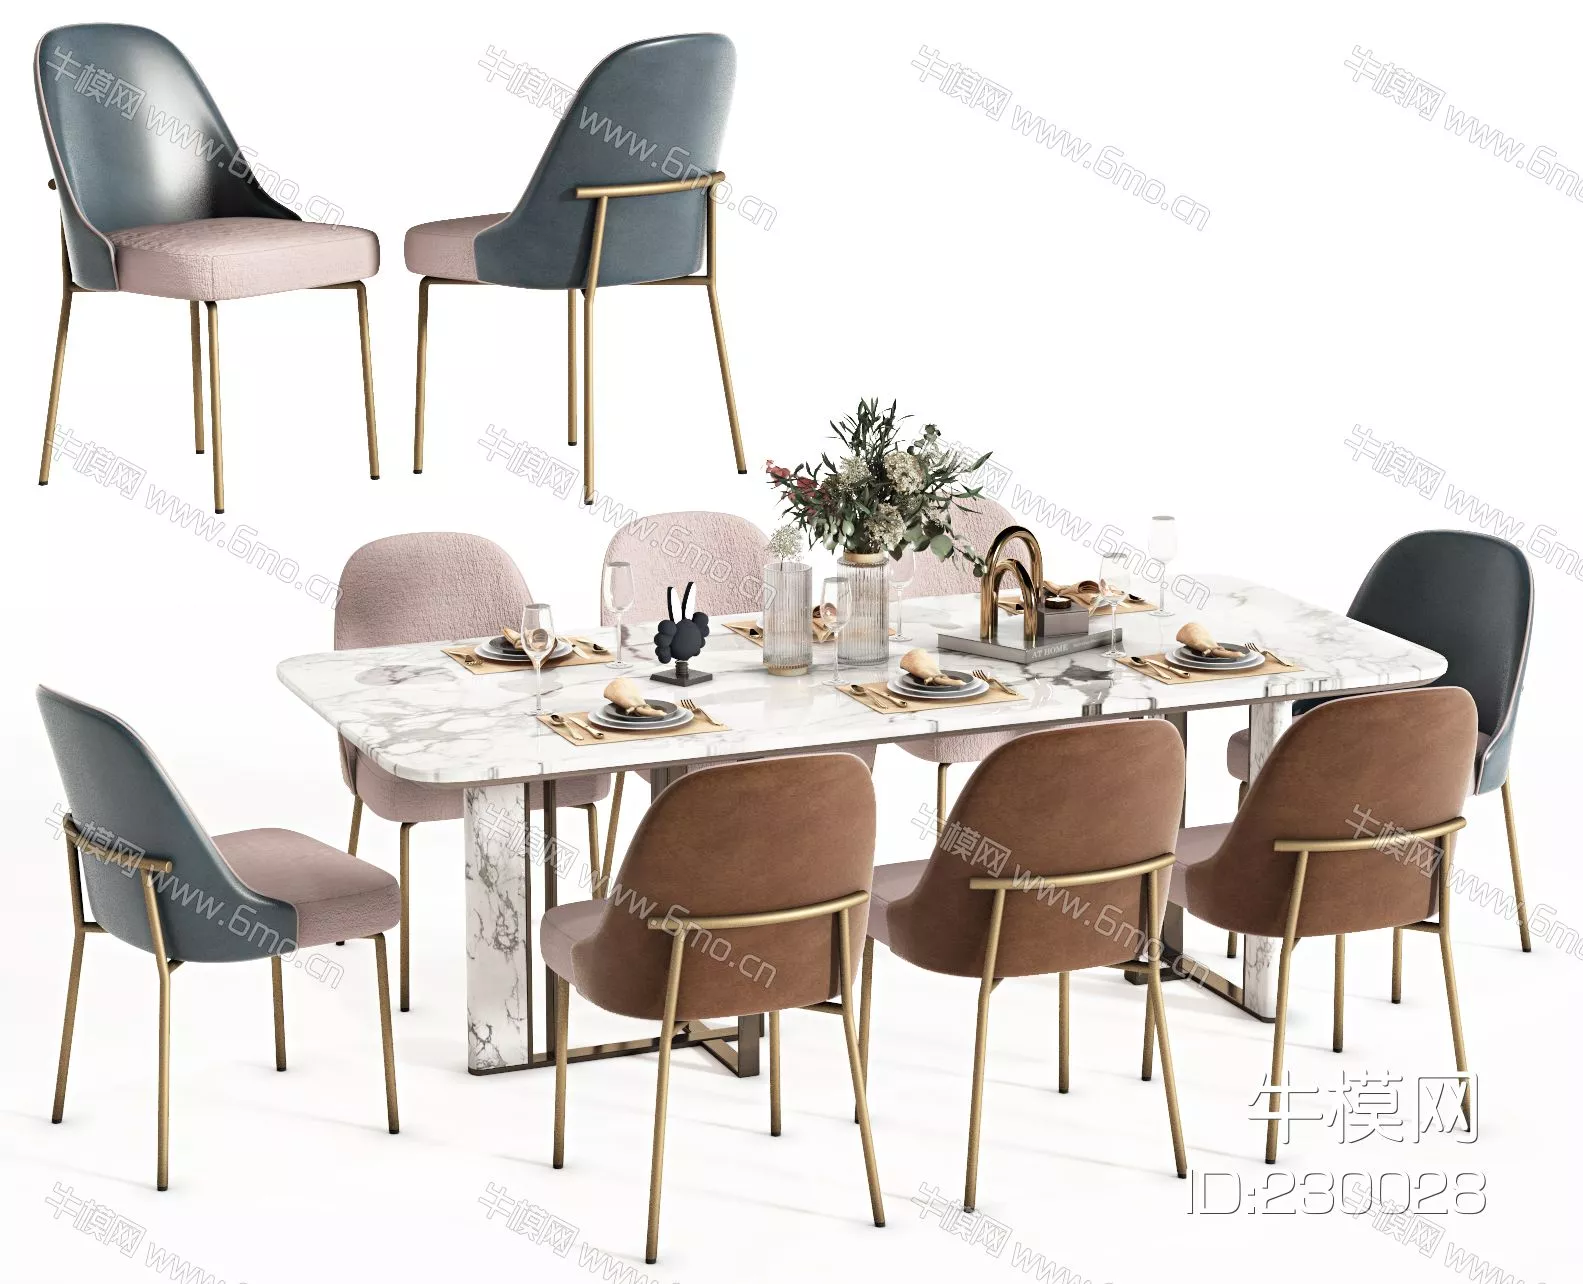 MODERN DINING TABLE SET - SKETCHUP 3D MODEL - VRAY - 230028